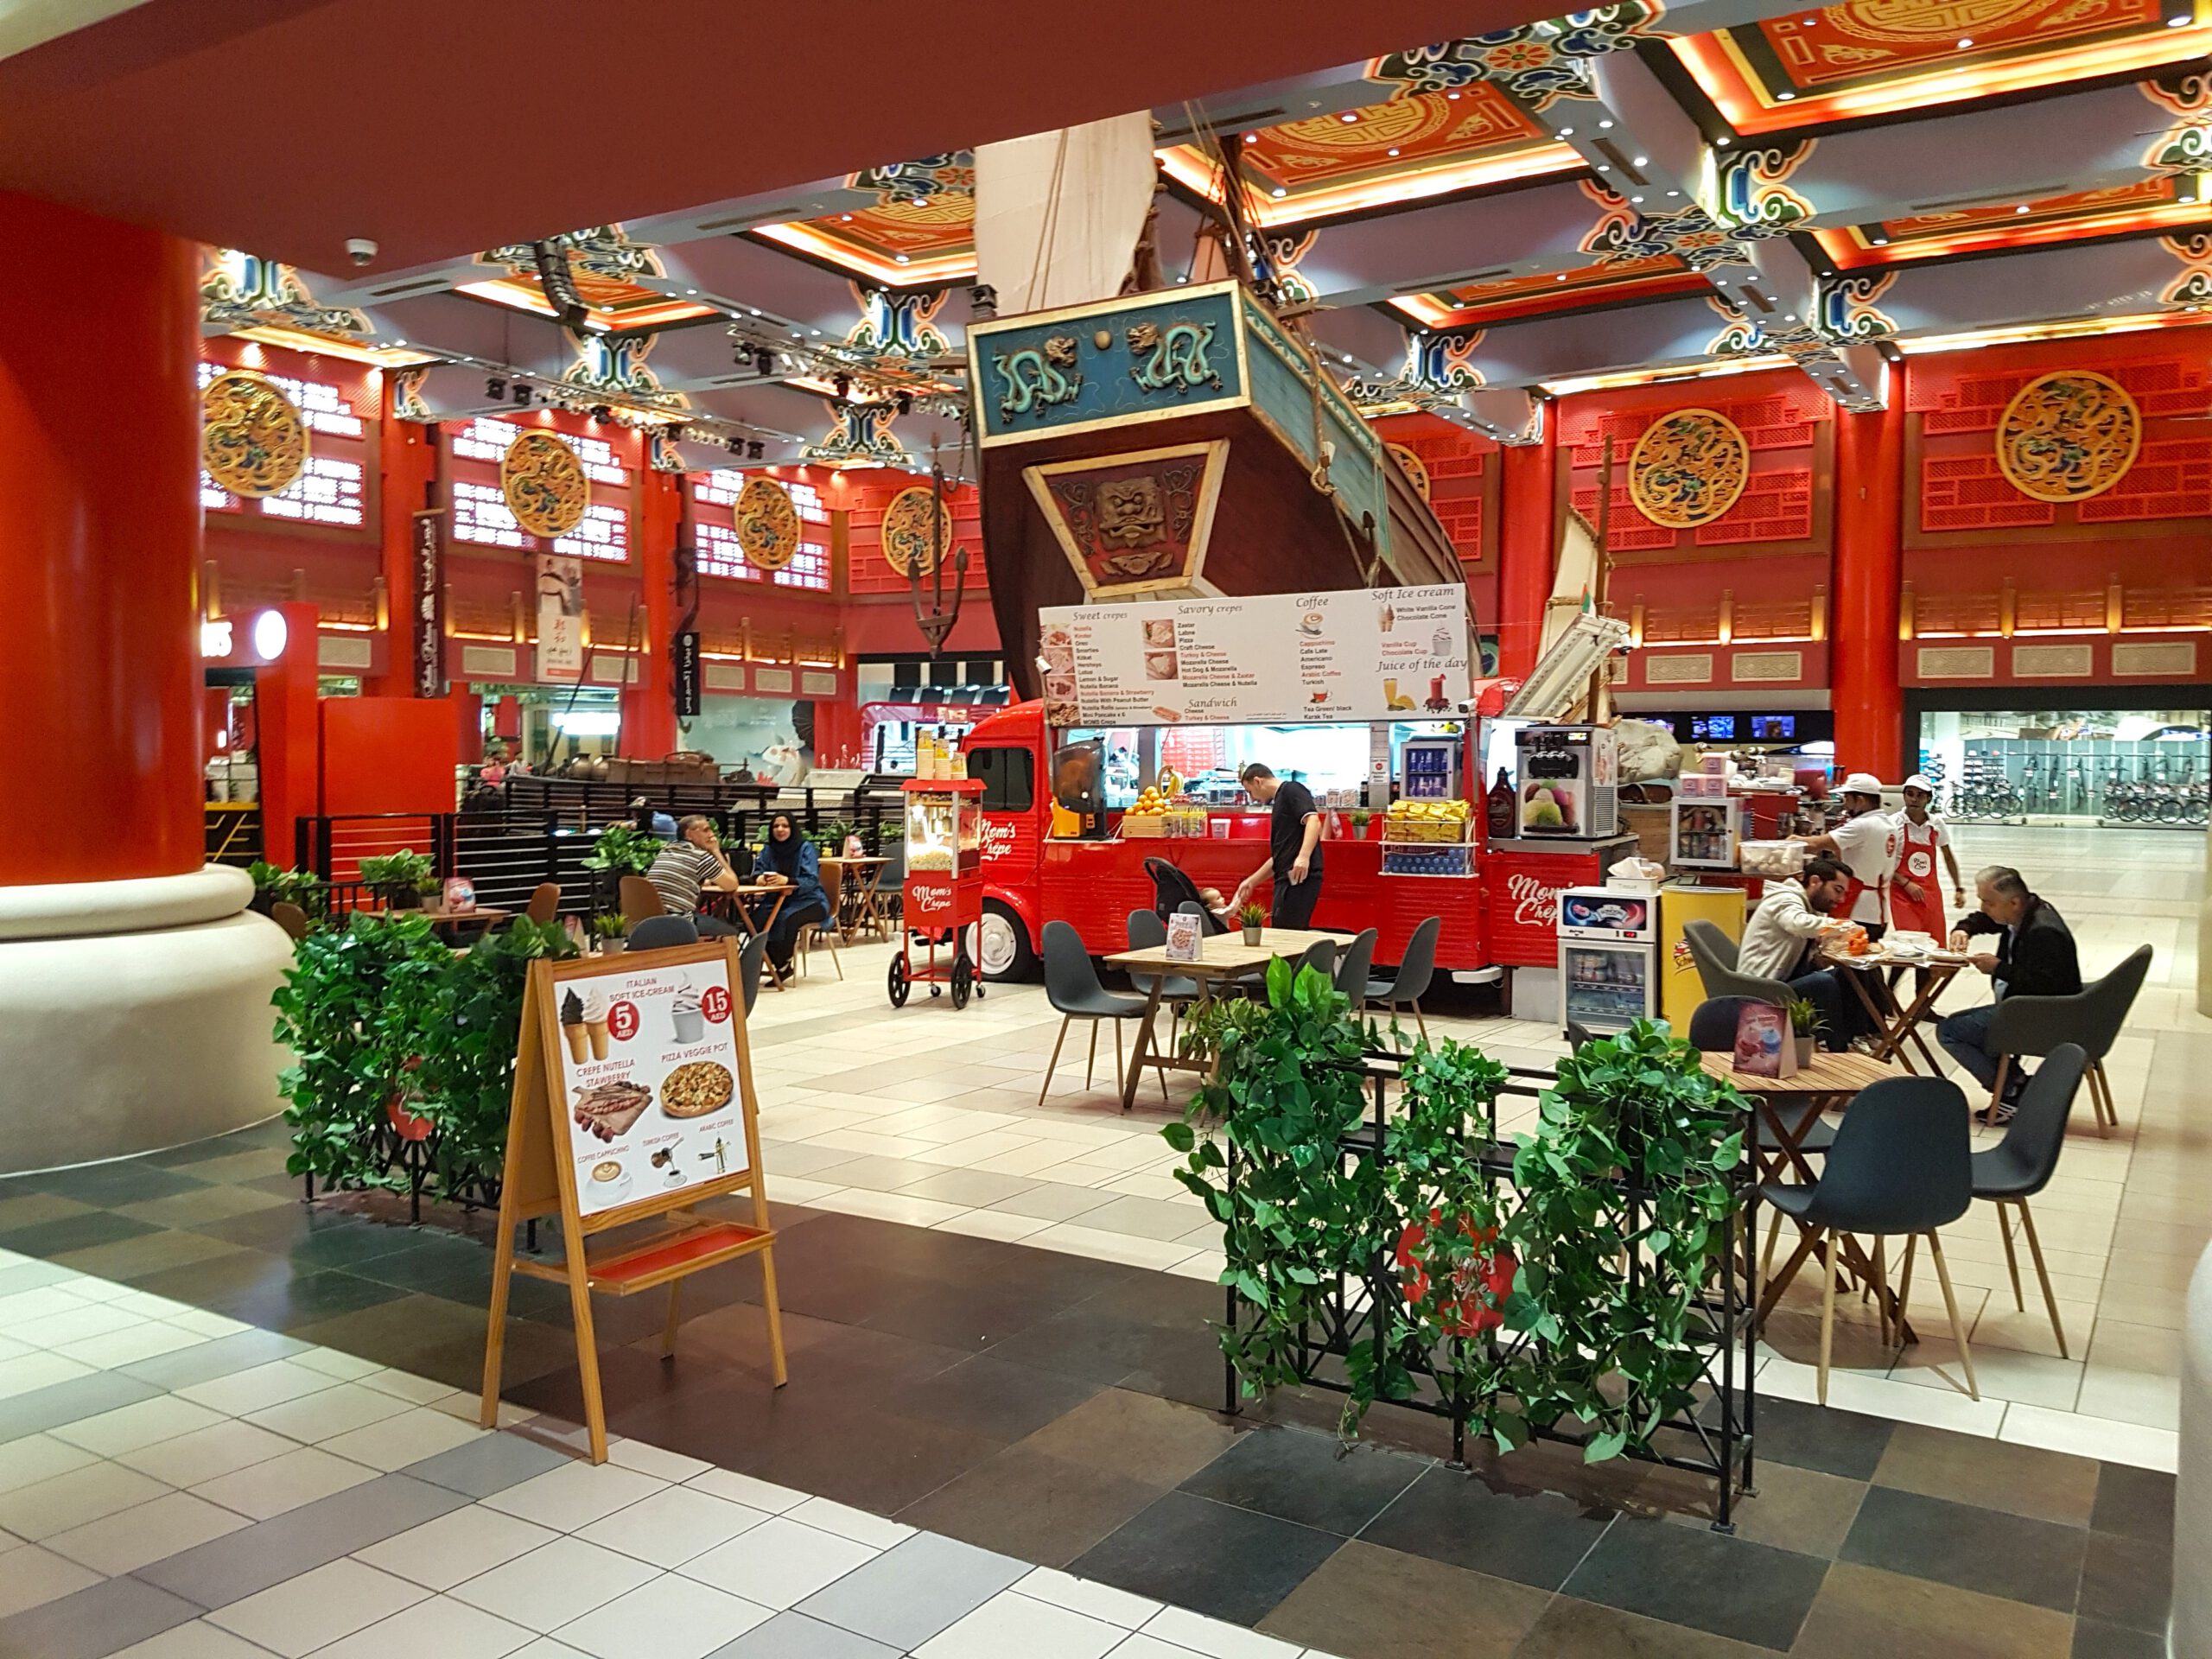 Ibn Battuta Mall in Dubai - Restaurant